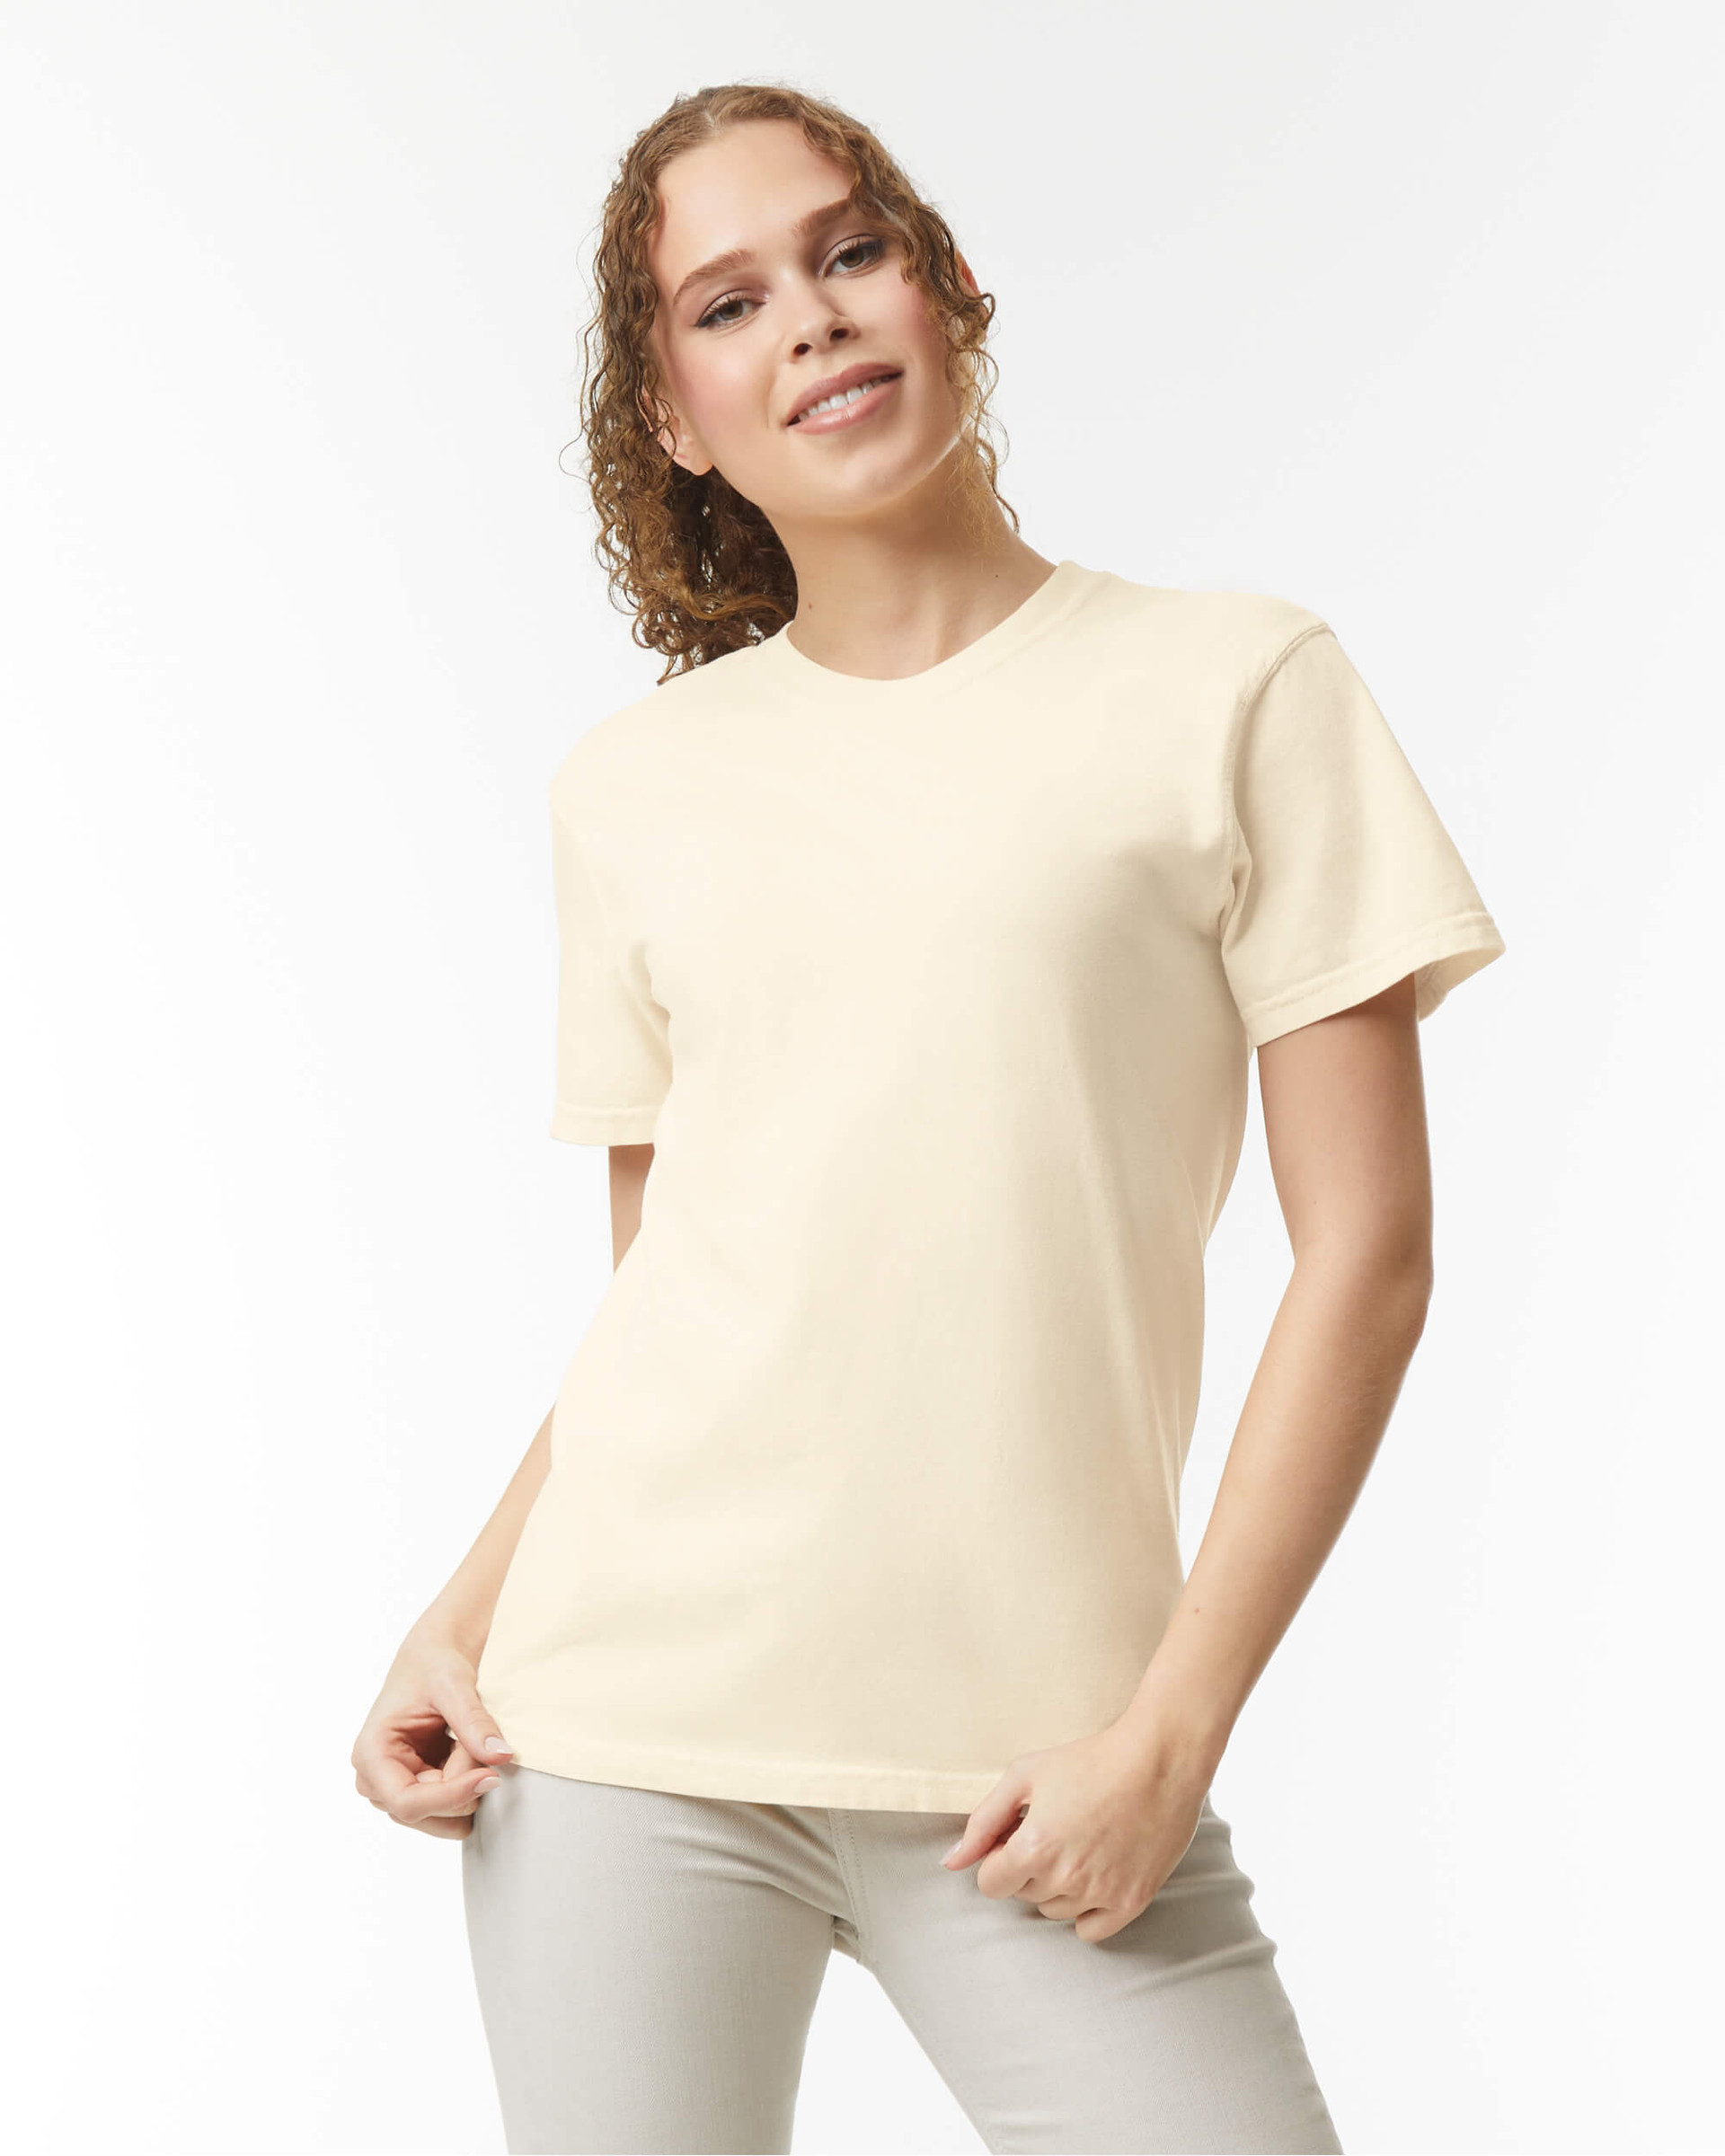 Browse Comfort Colors - T-Shirts & Tanks | Gildan Australia